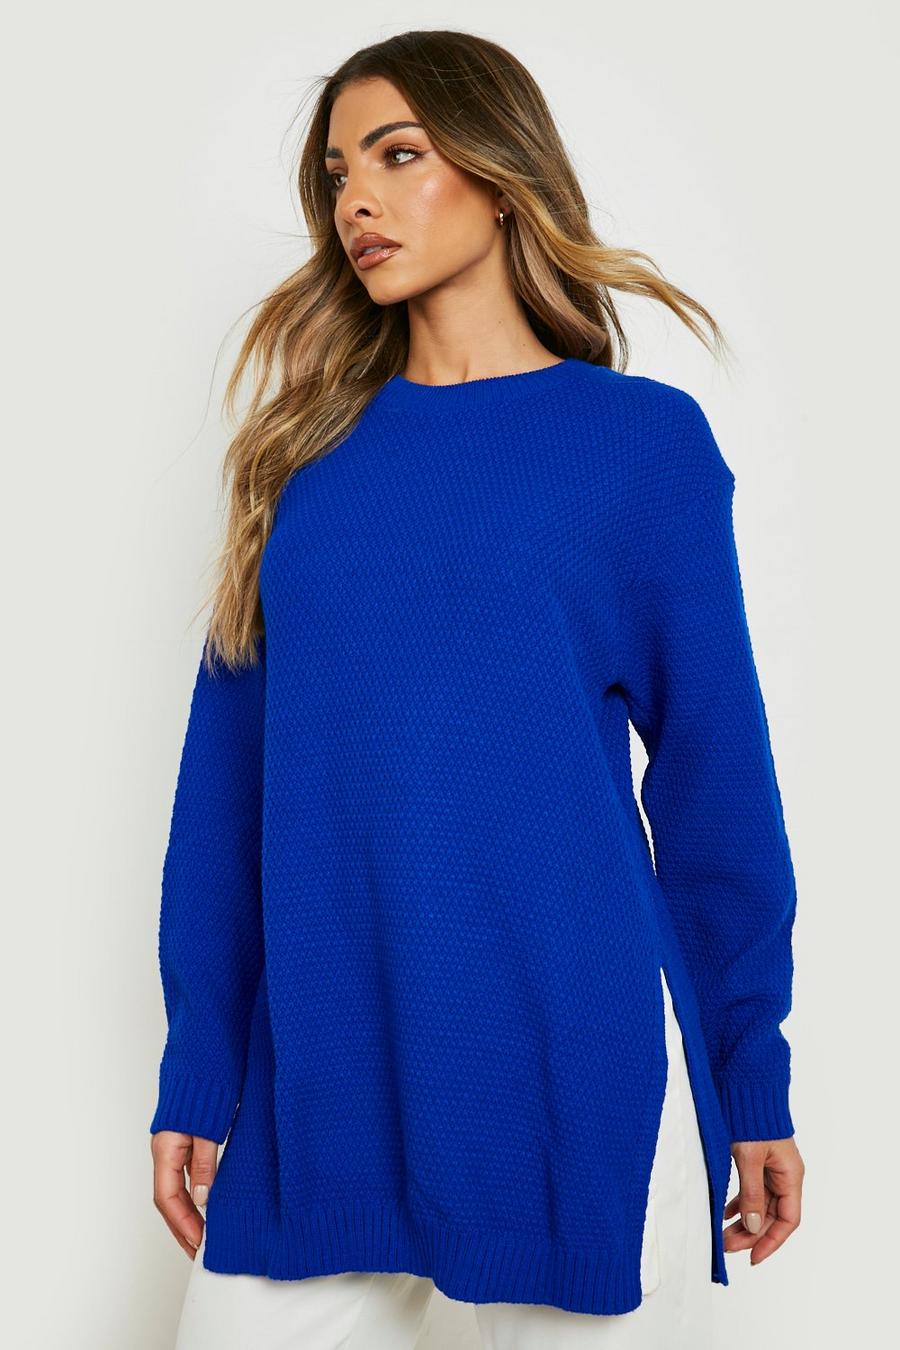 Cobalt blue Side Split Moss Stitch Tunic Sweater